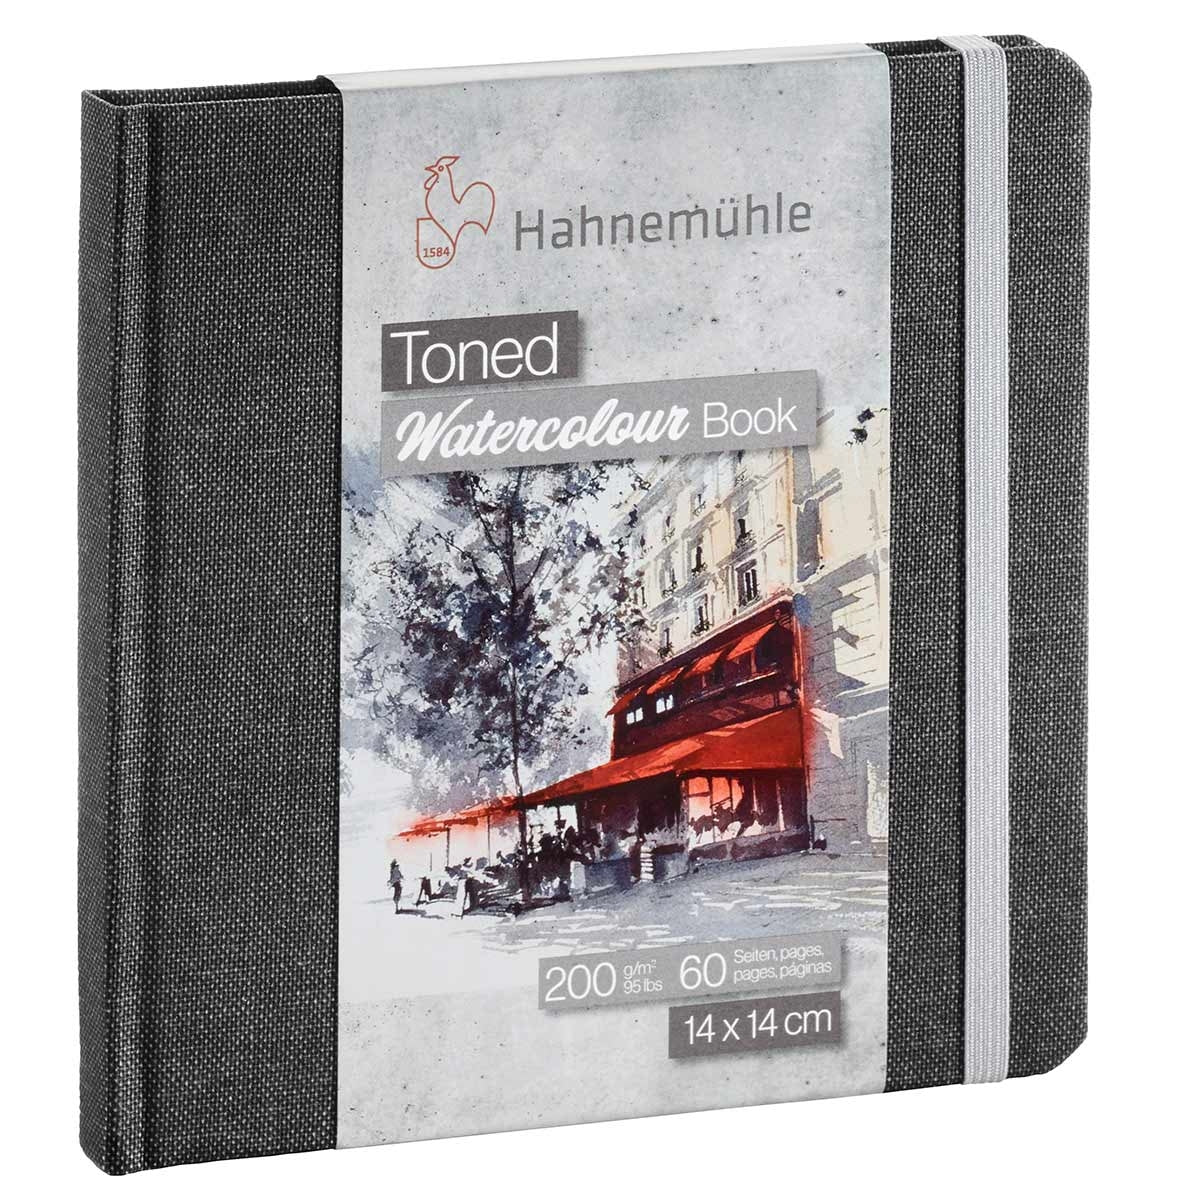 Hahnemuhle - getönte Aquarellbücher - Grau 14x cm Quadrat